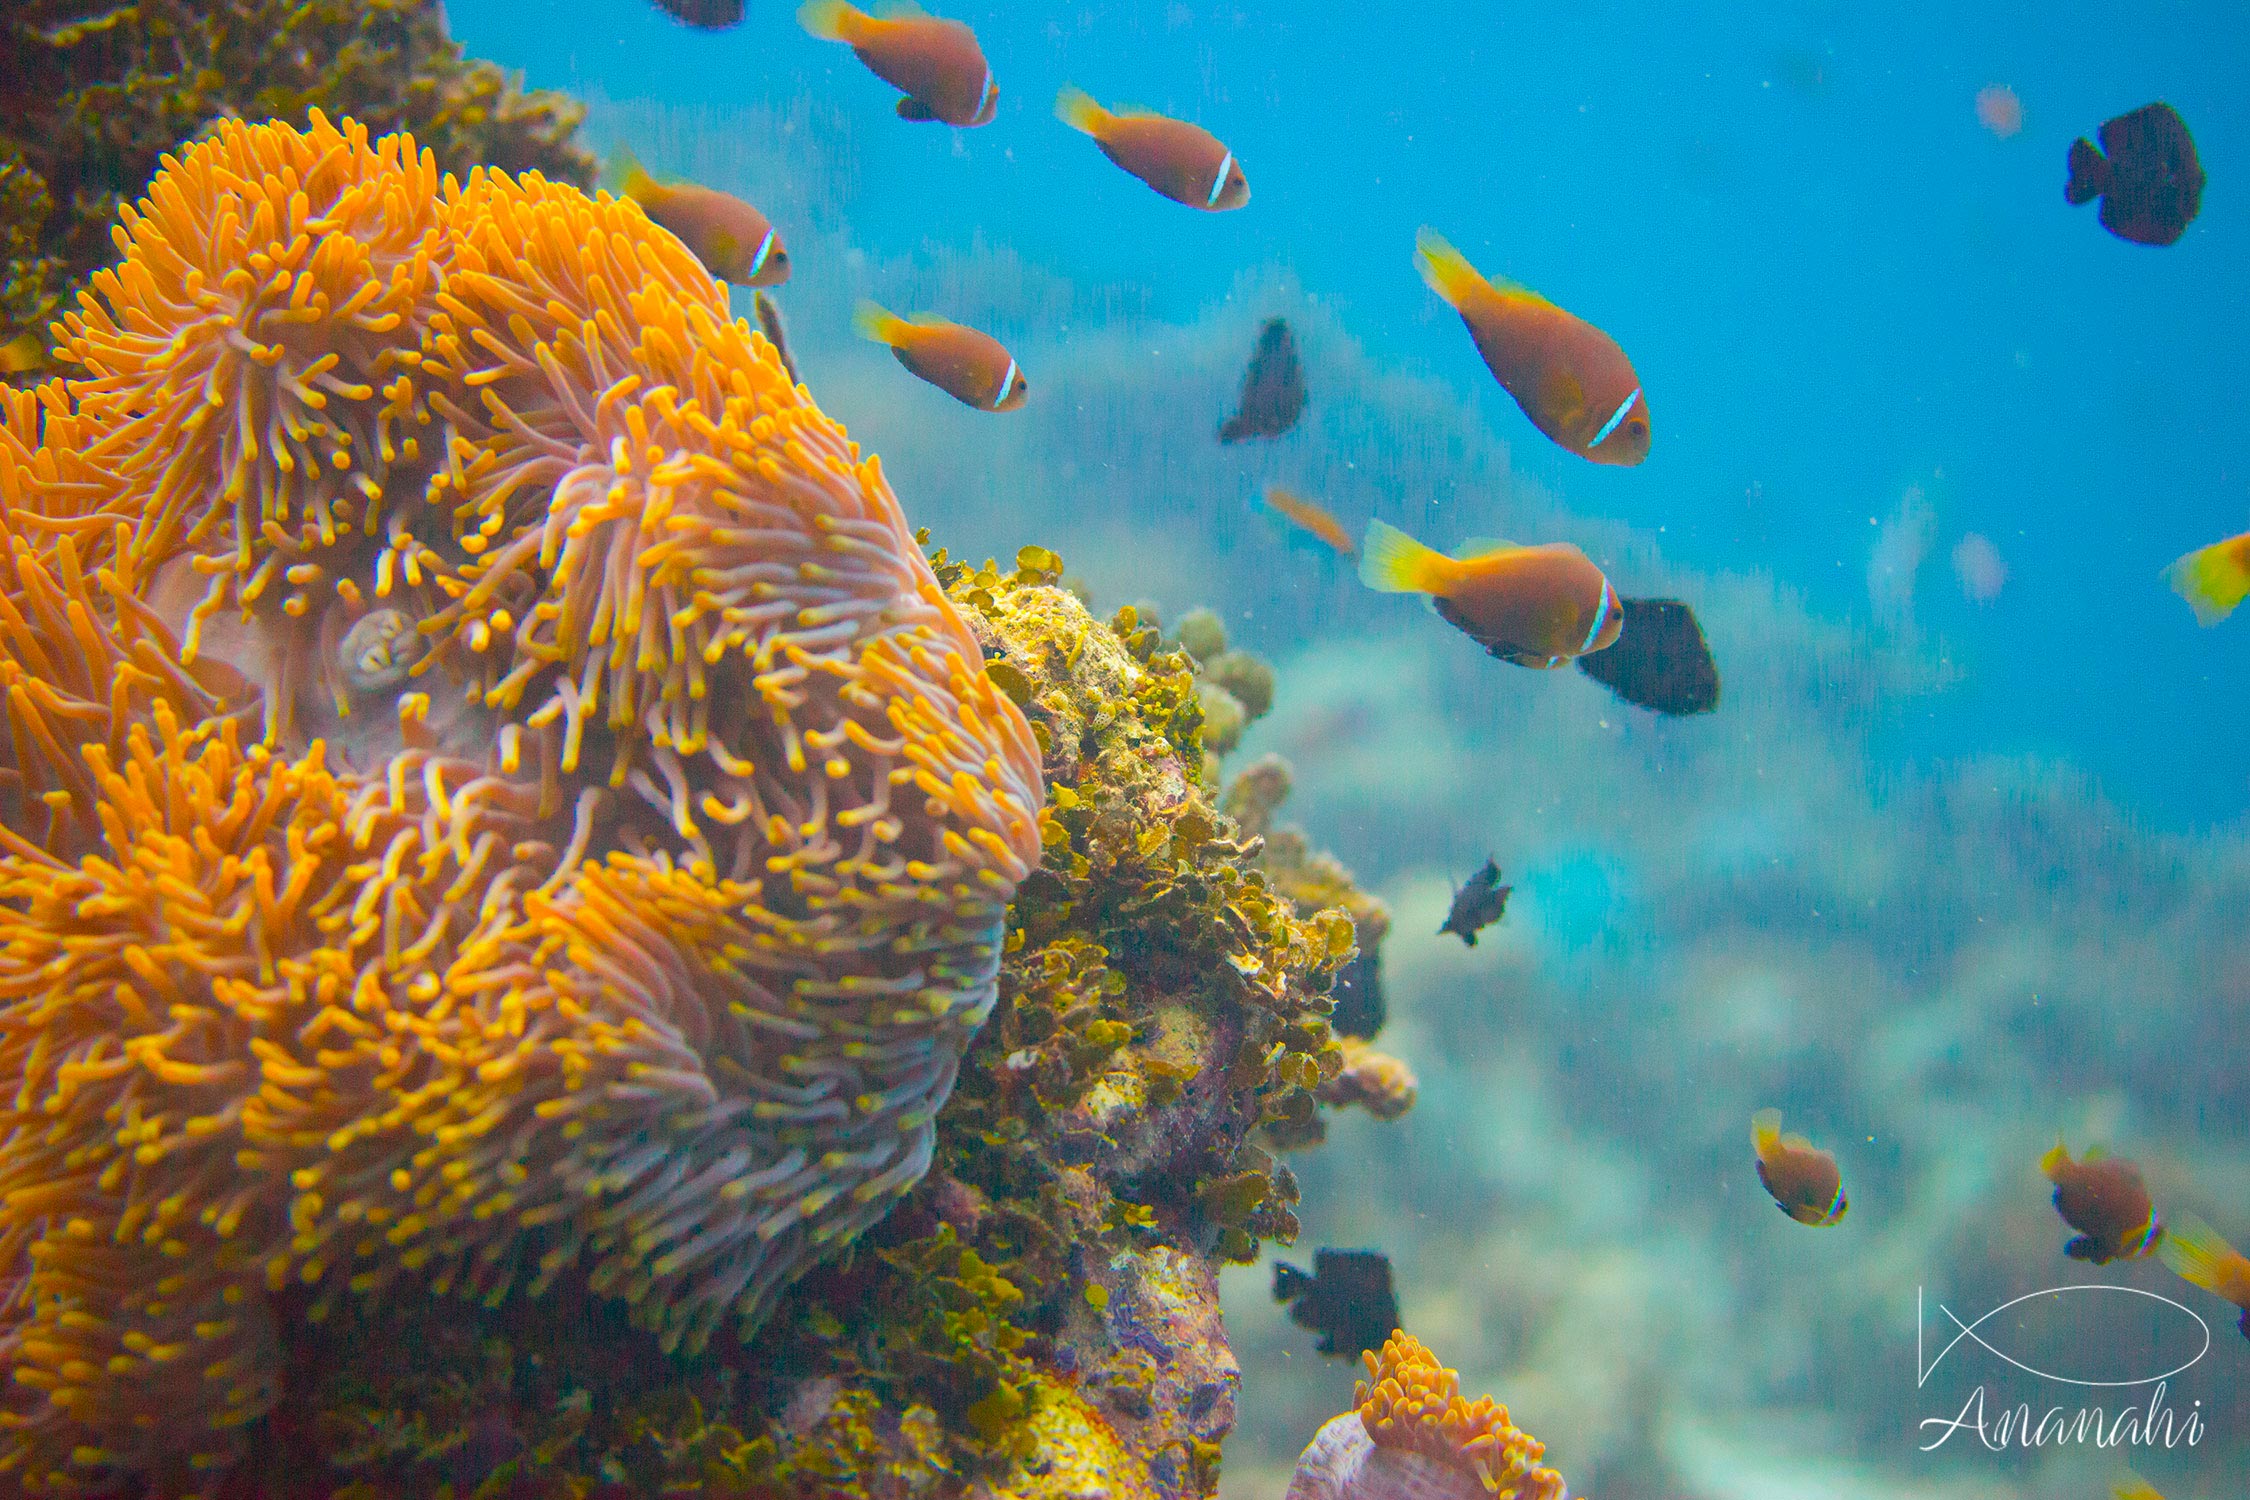 Blackfinned anemonefish of Maldives